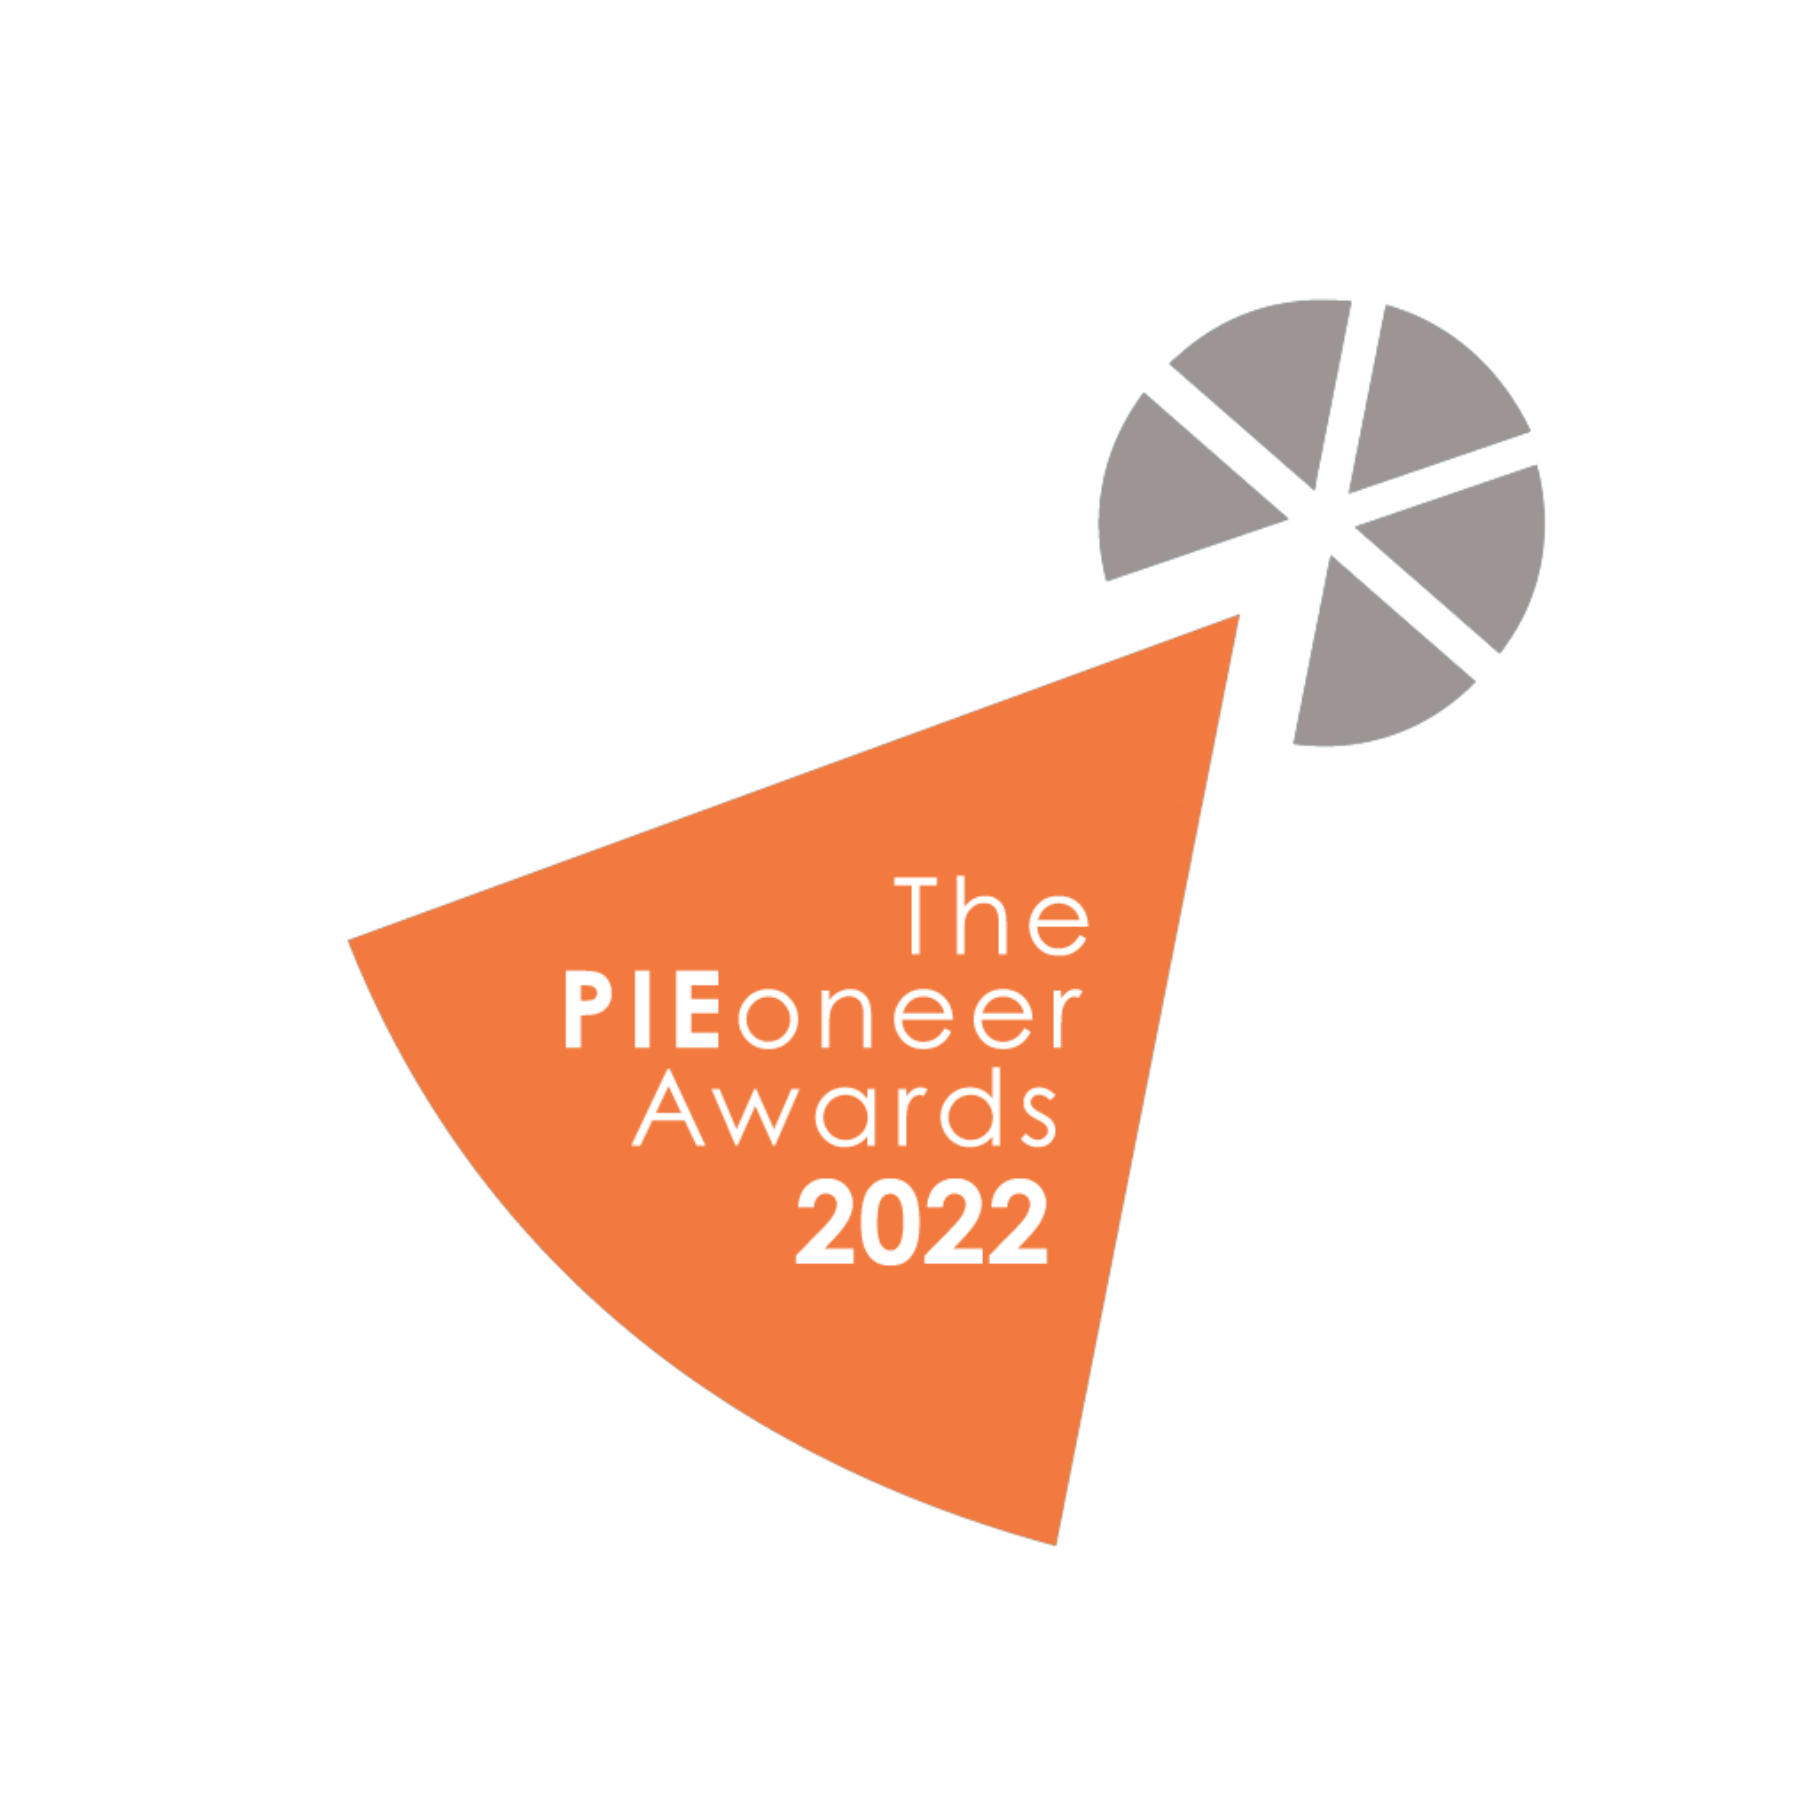 The Pieoneer Awards of 2022